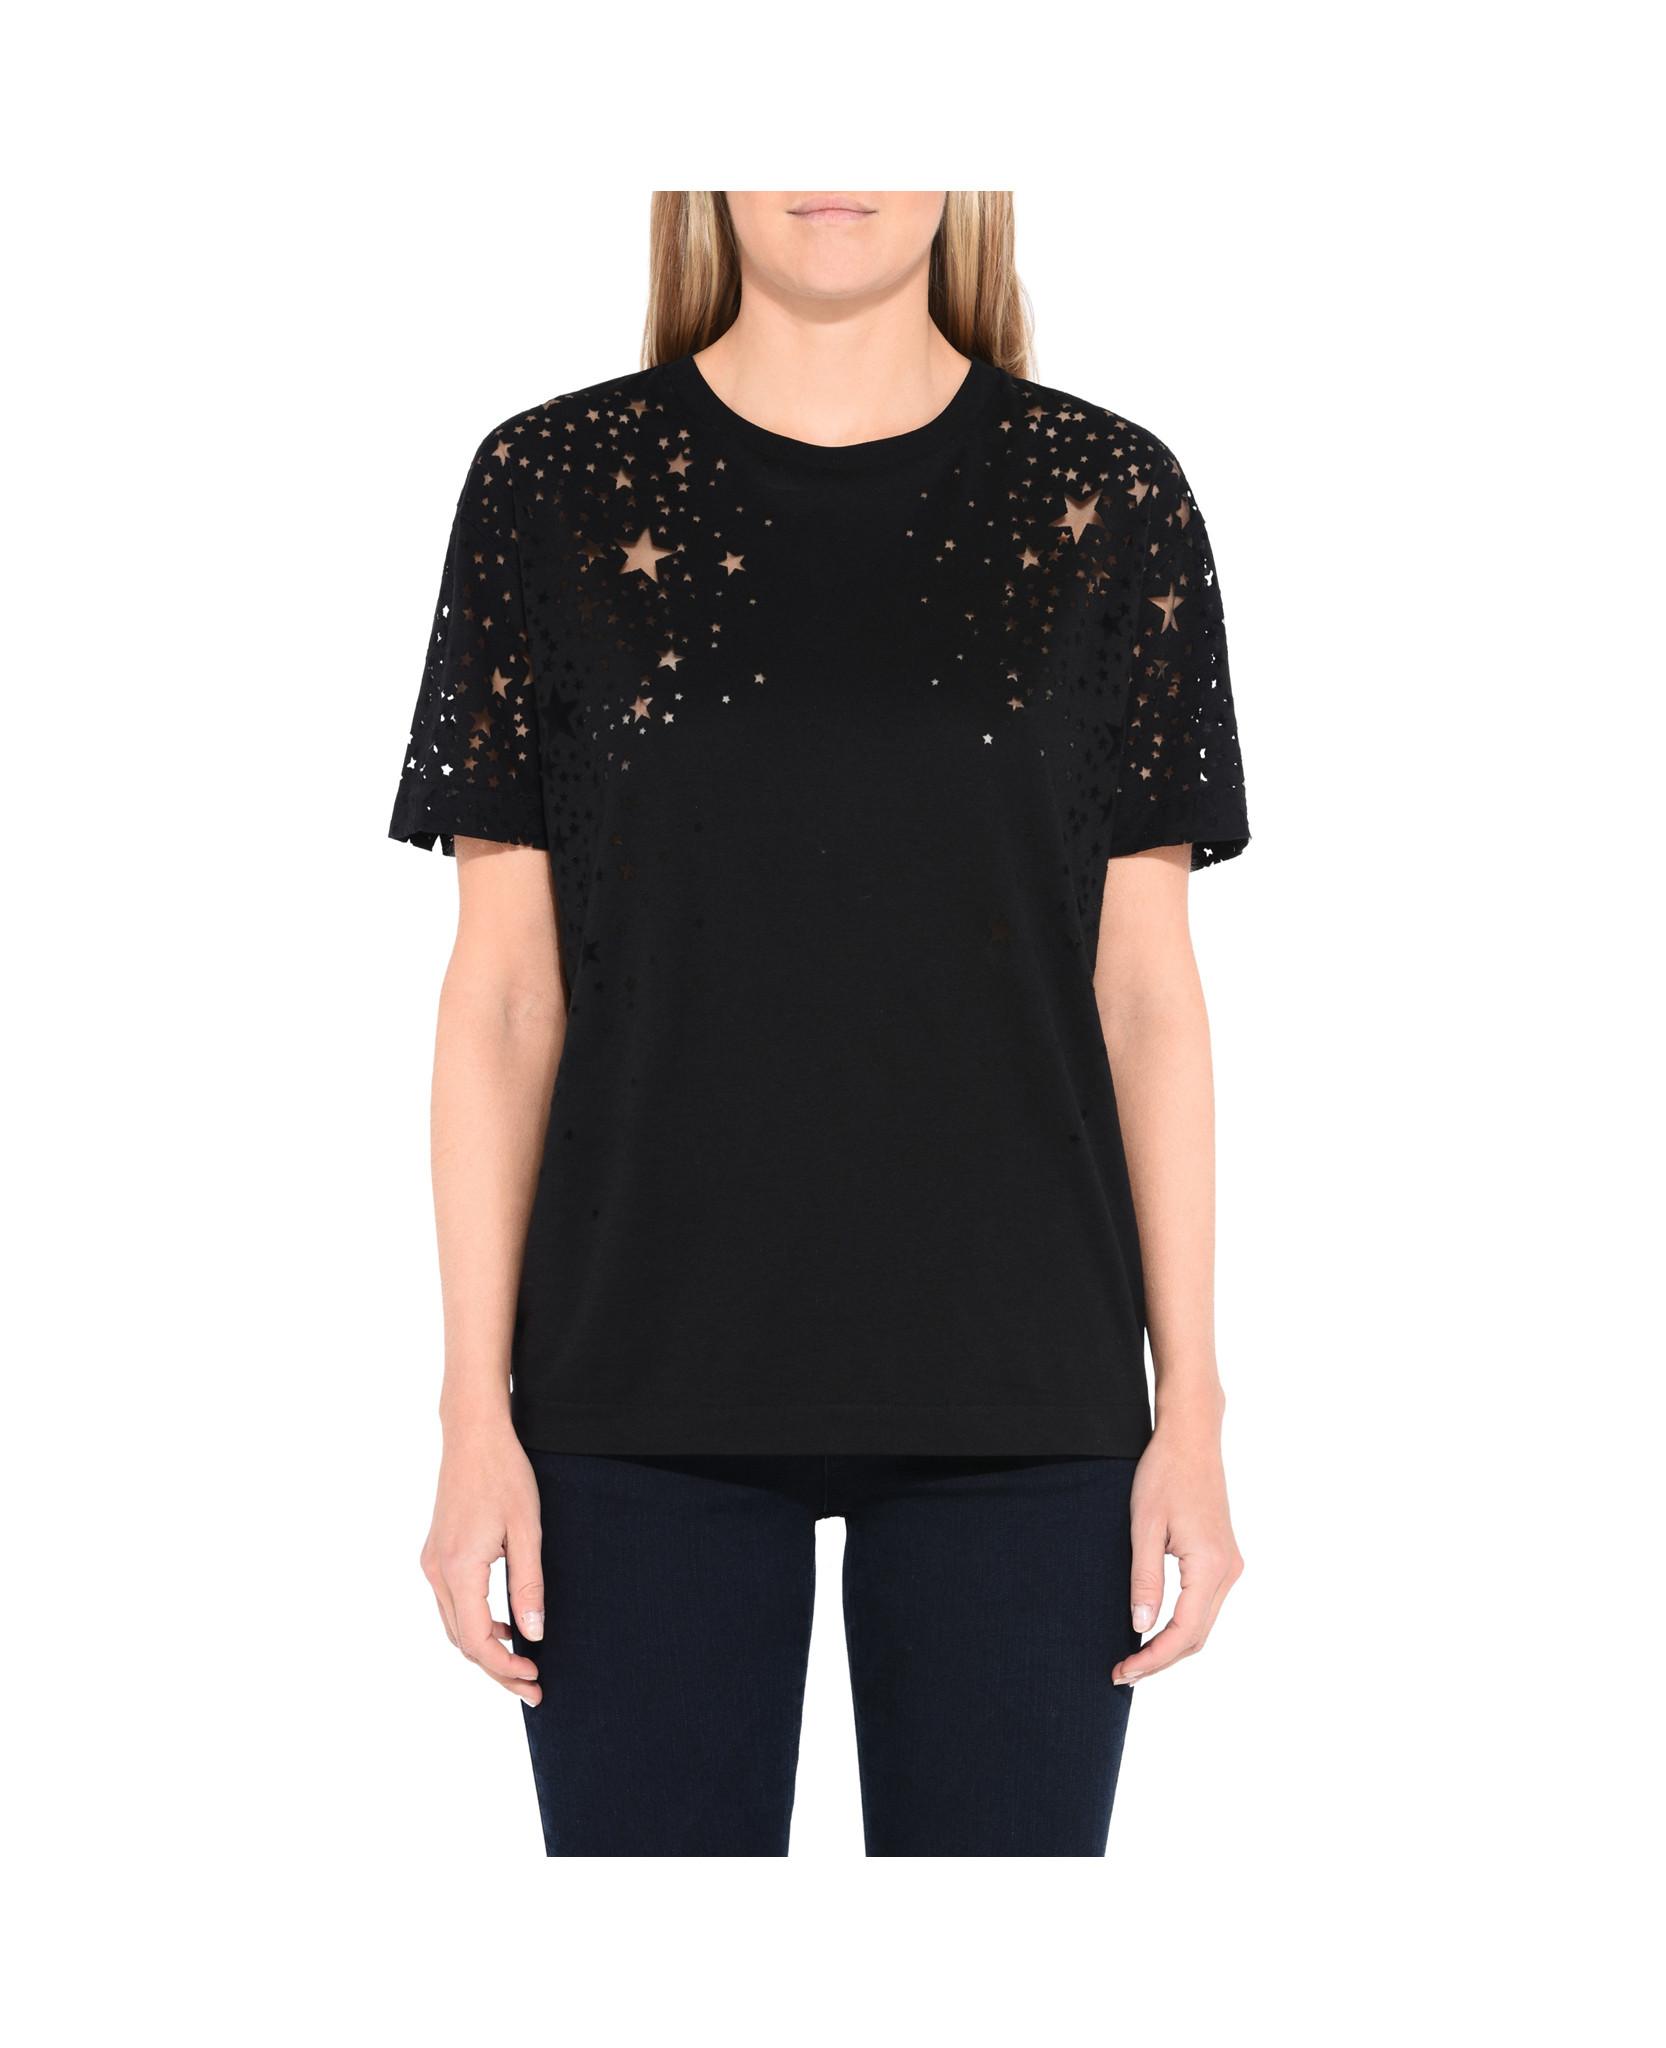 Stella McCartney Cotton Sheer Stars T-shirt in Black - Lyst